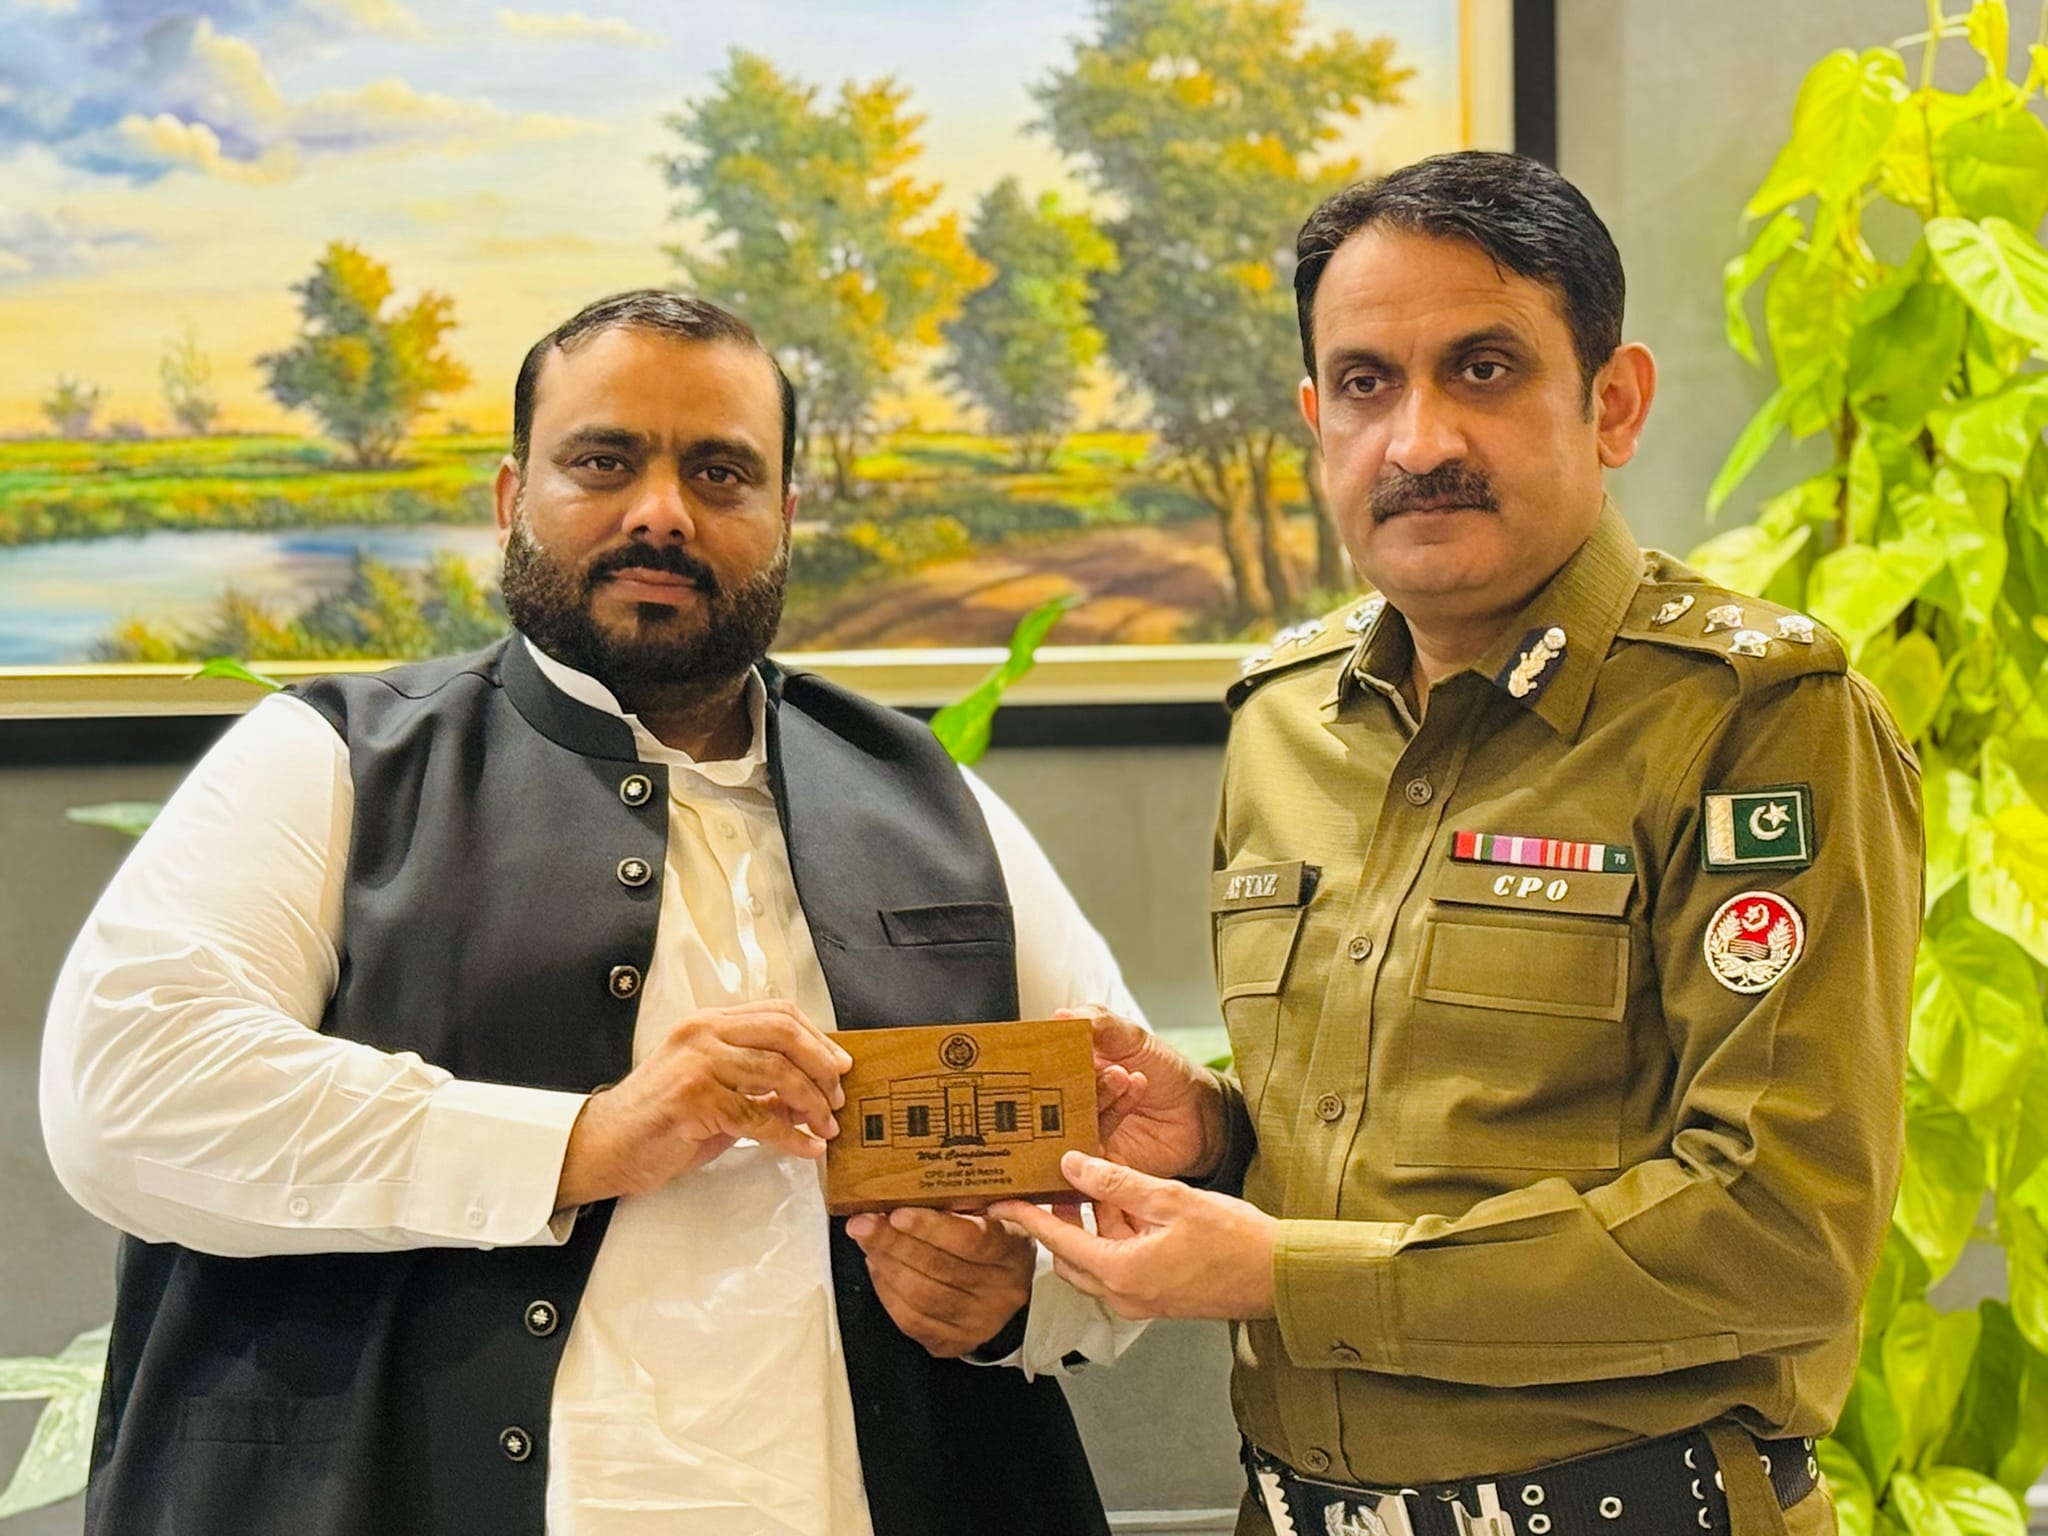 City Police Officer presented souvenir to President GCCI